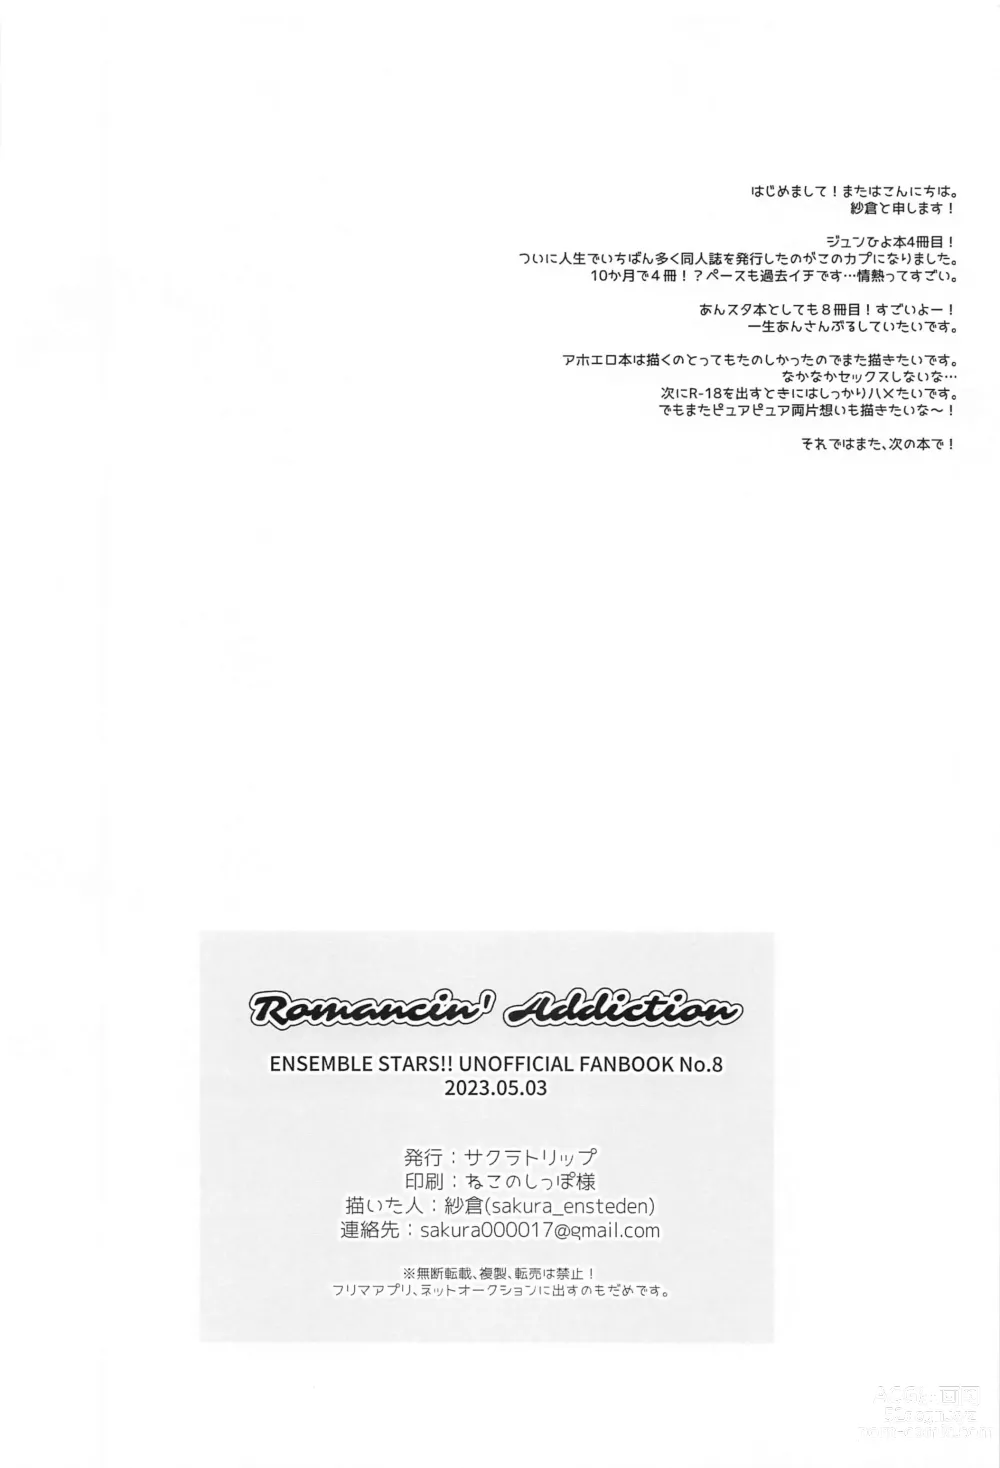 Page 16 of doujinshi Romancin’ Addiction